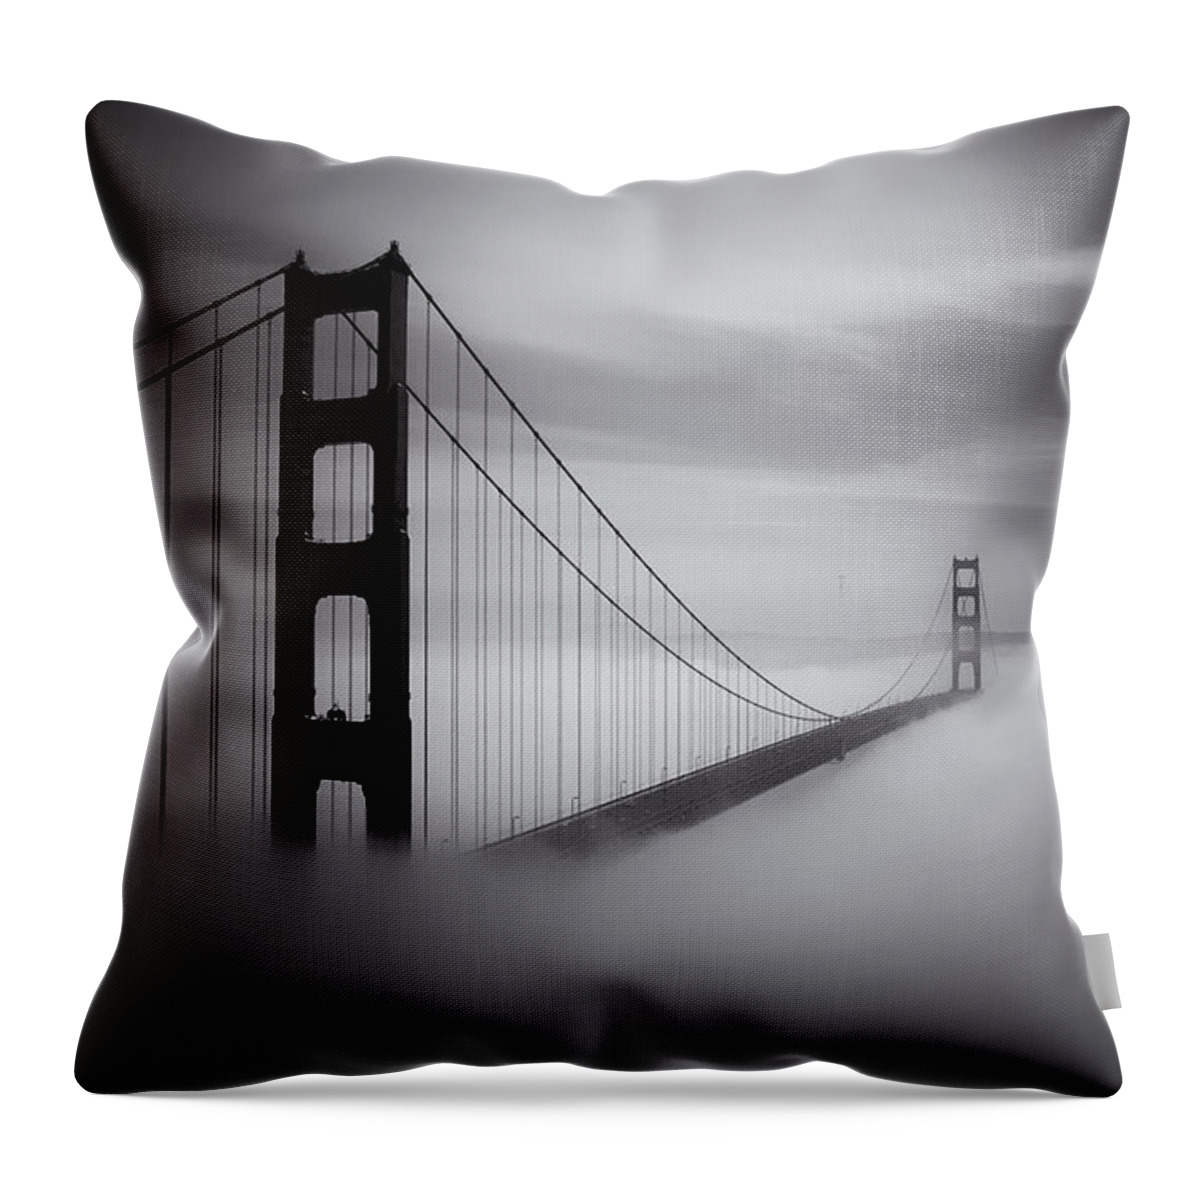 Golden Gate Bridge Throw Pillow featuring the photograph Golden Gate by Ingrid Smith-Johnsen